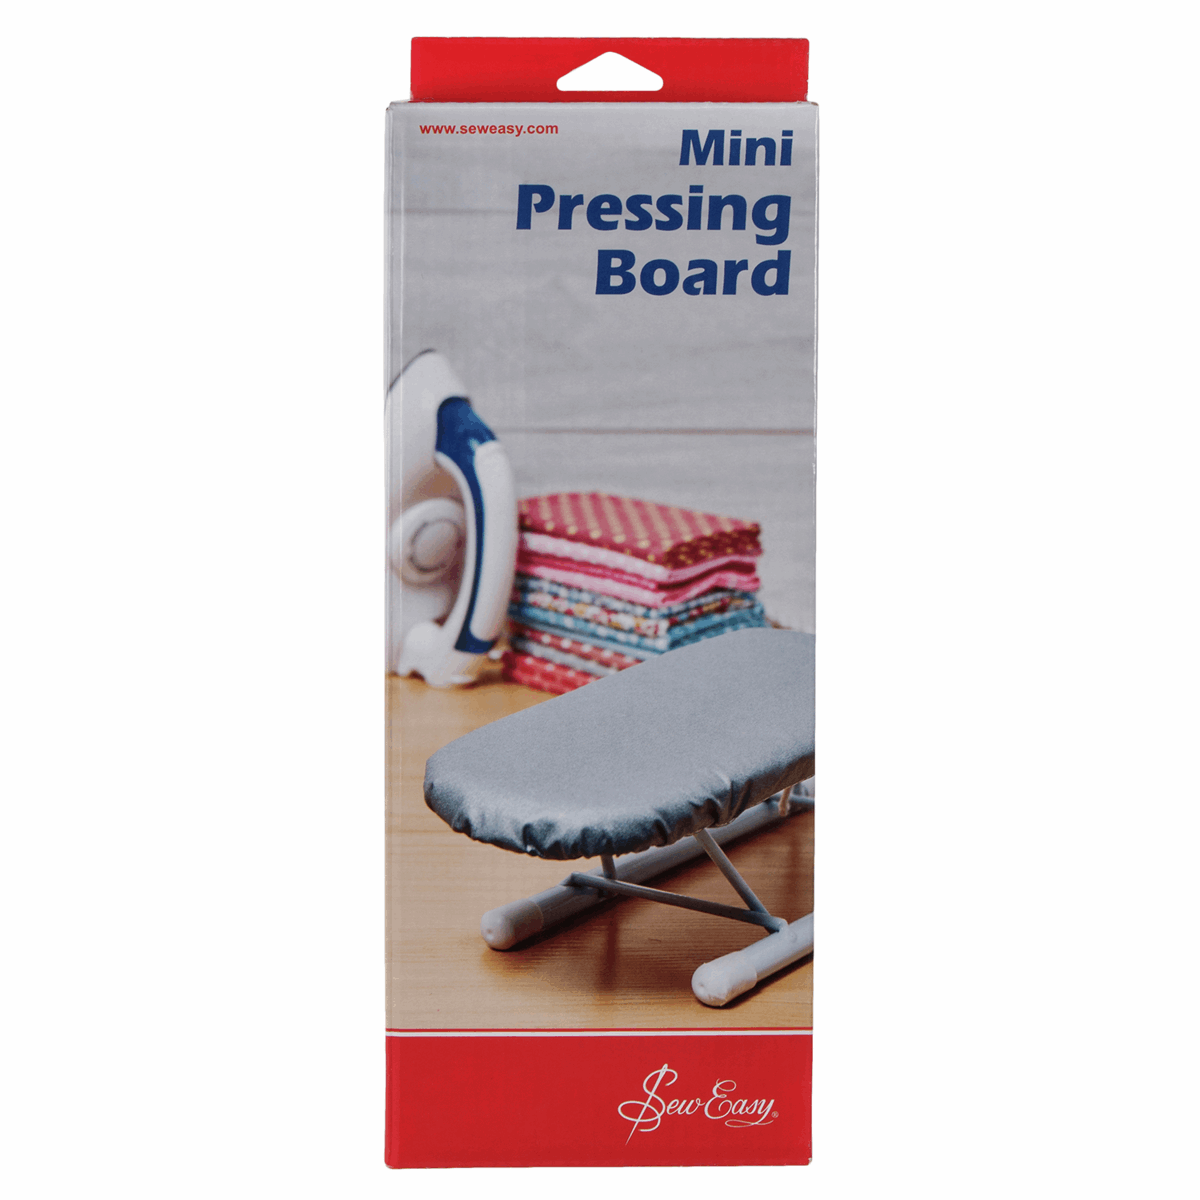 Mini Pressing Board - wipe clean surface